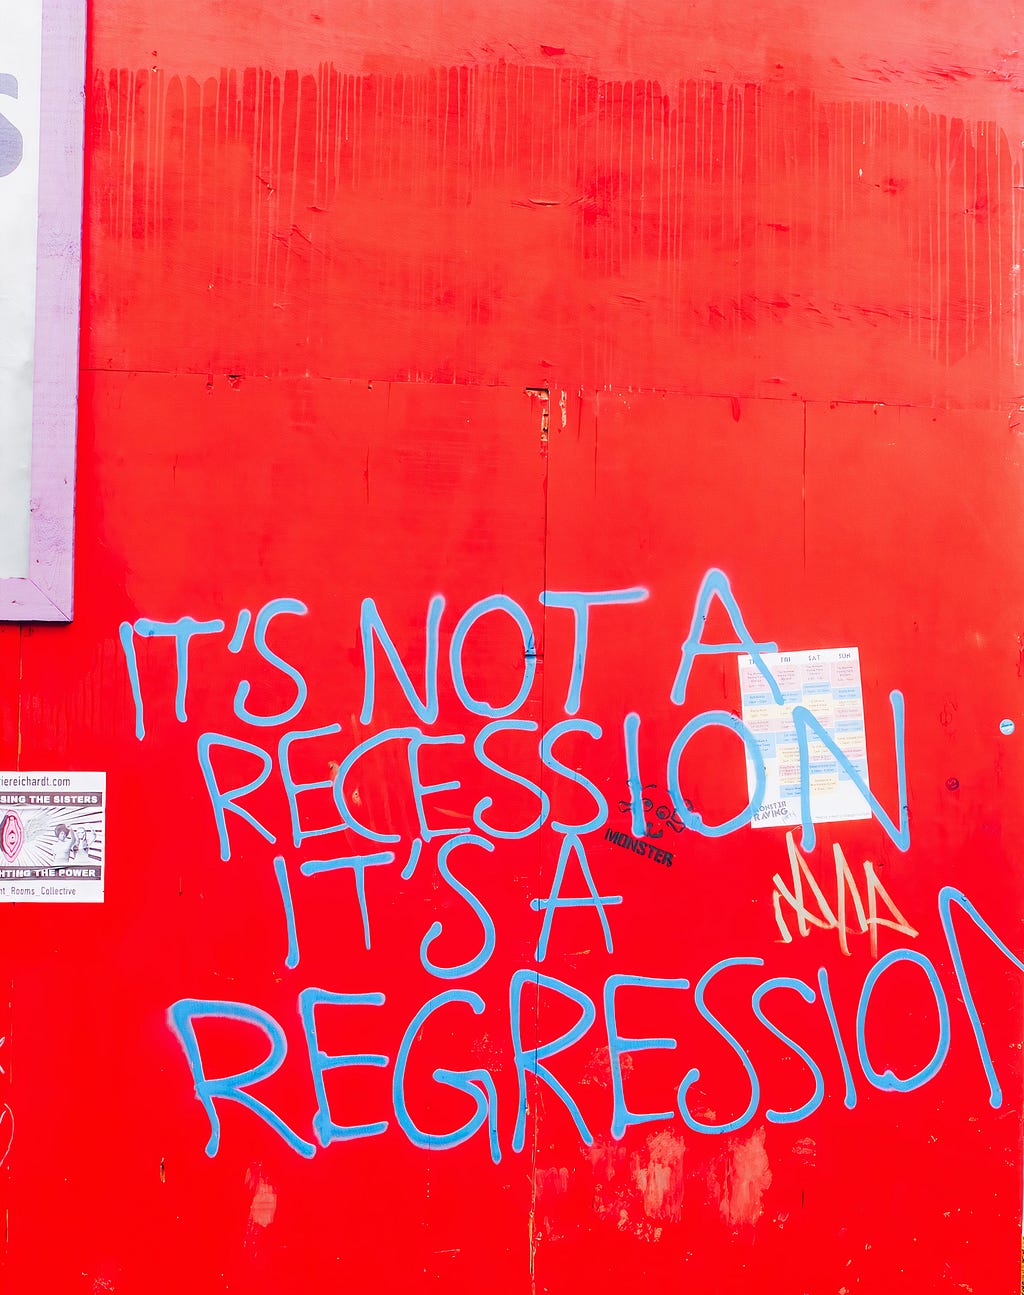 Recession Image